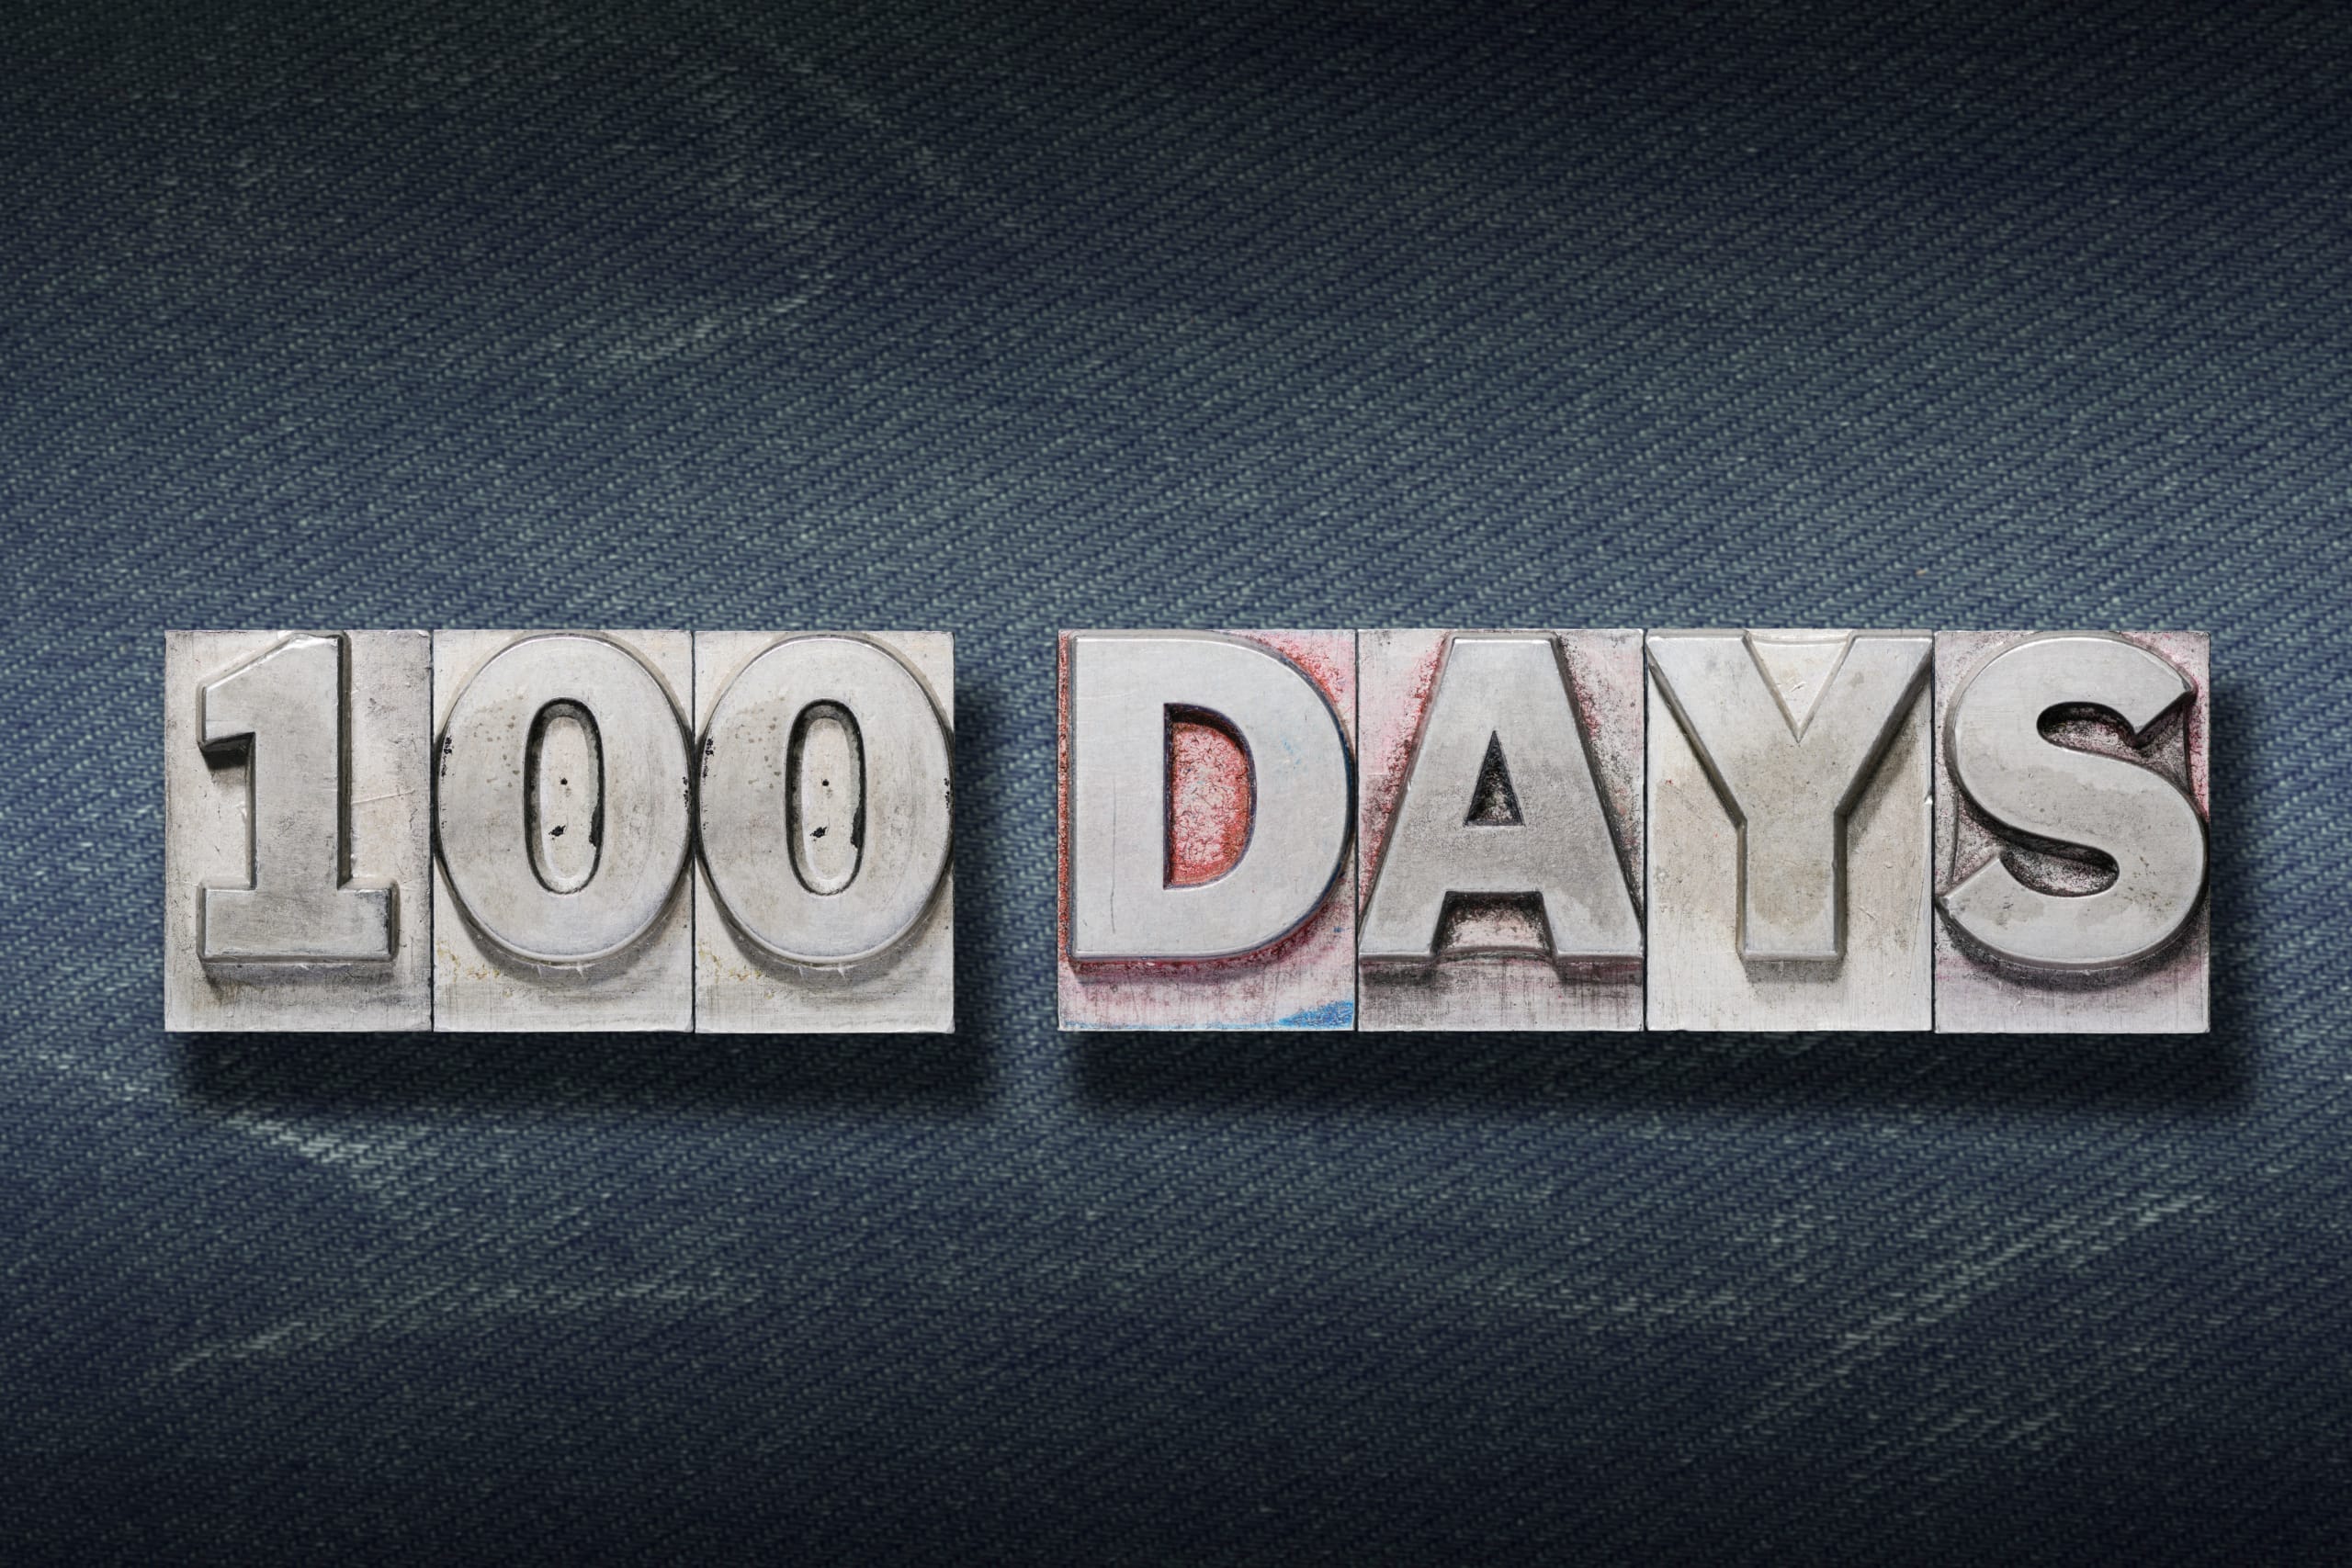 one hundred days phrase made from metallic letterpress on dark jeans background